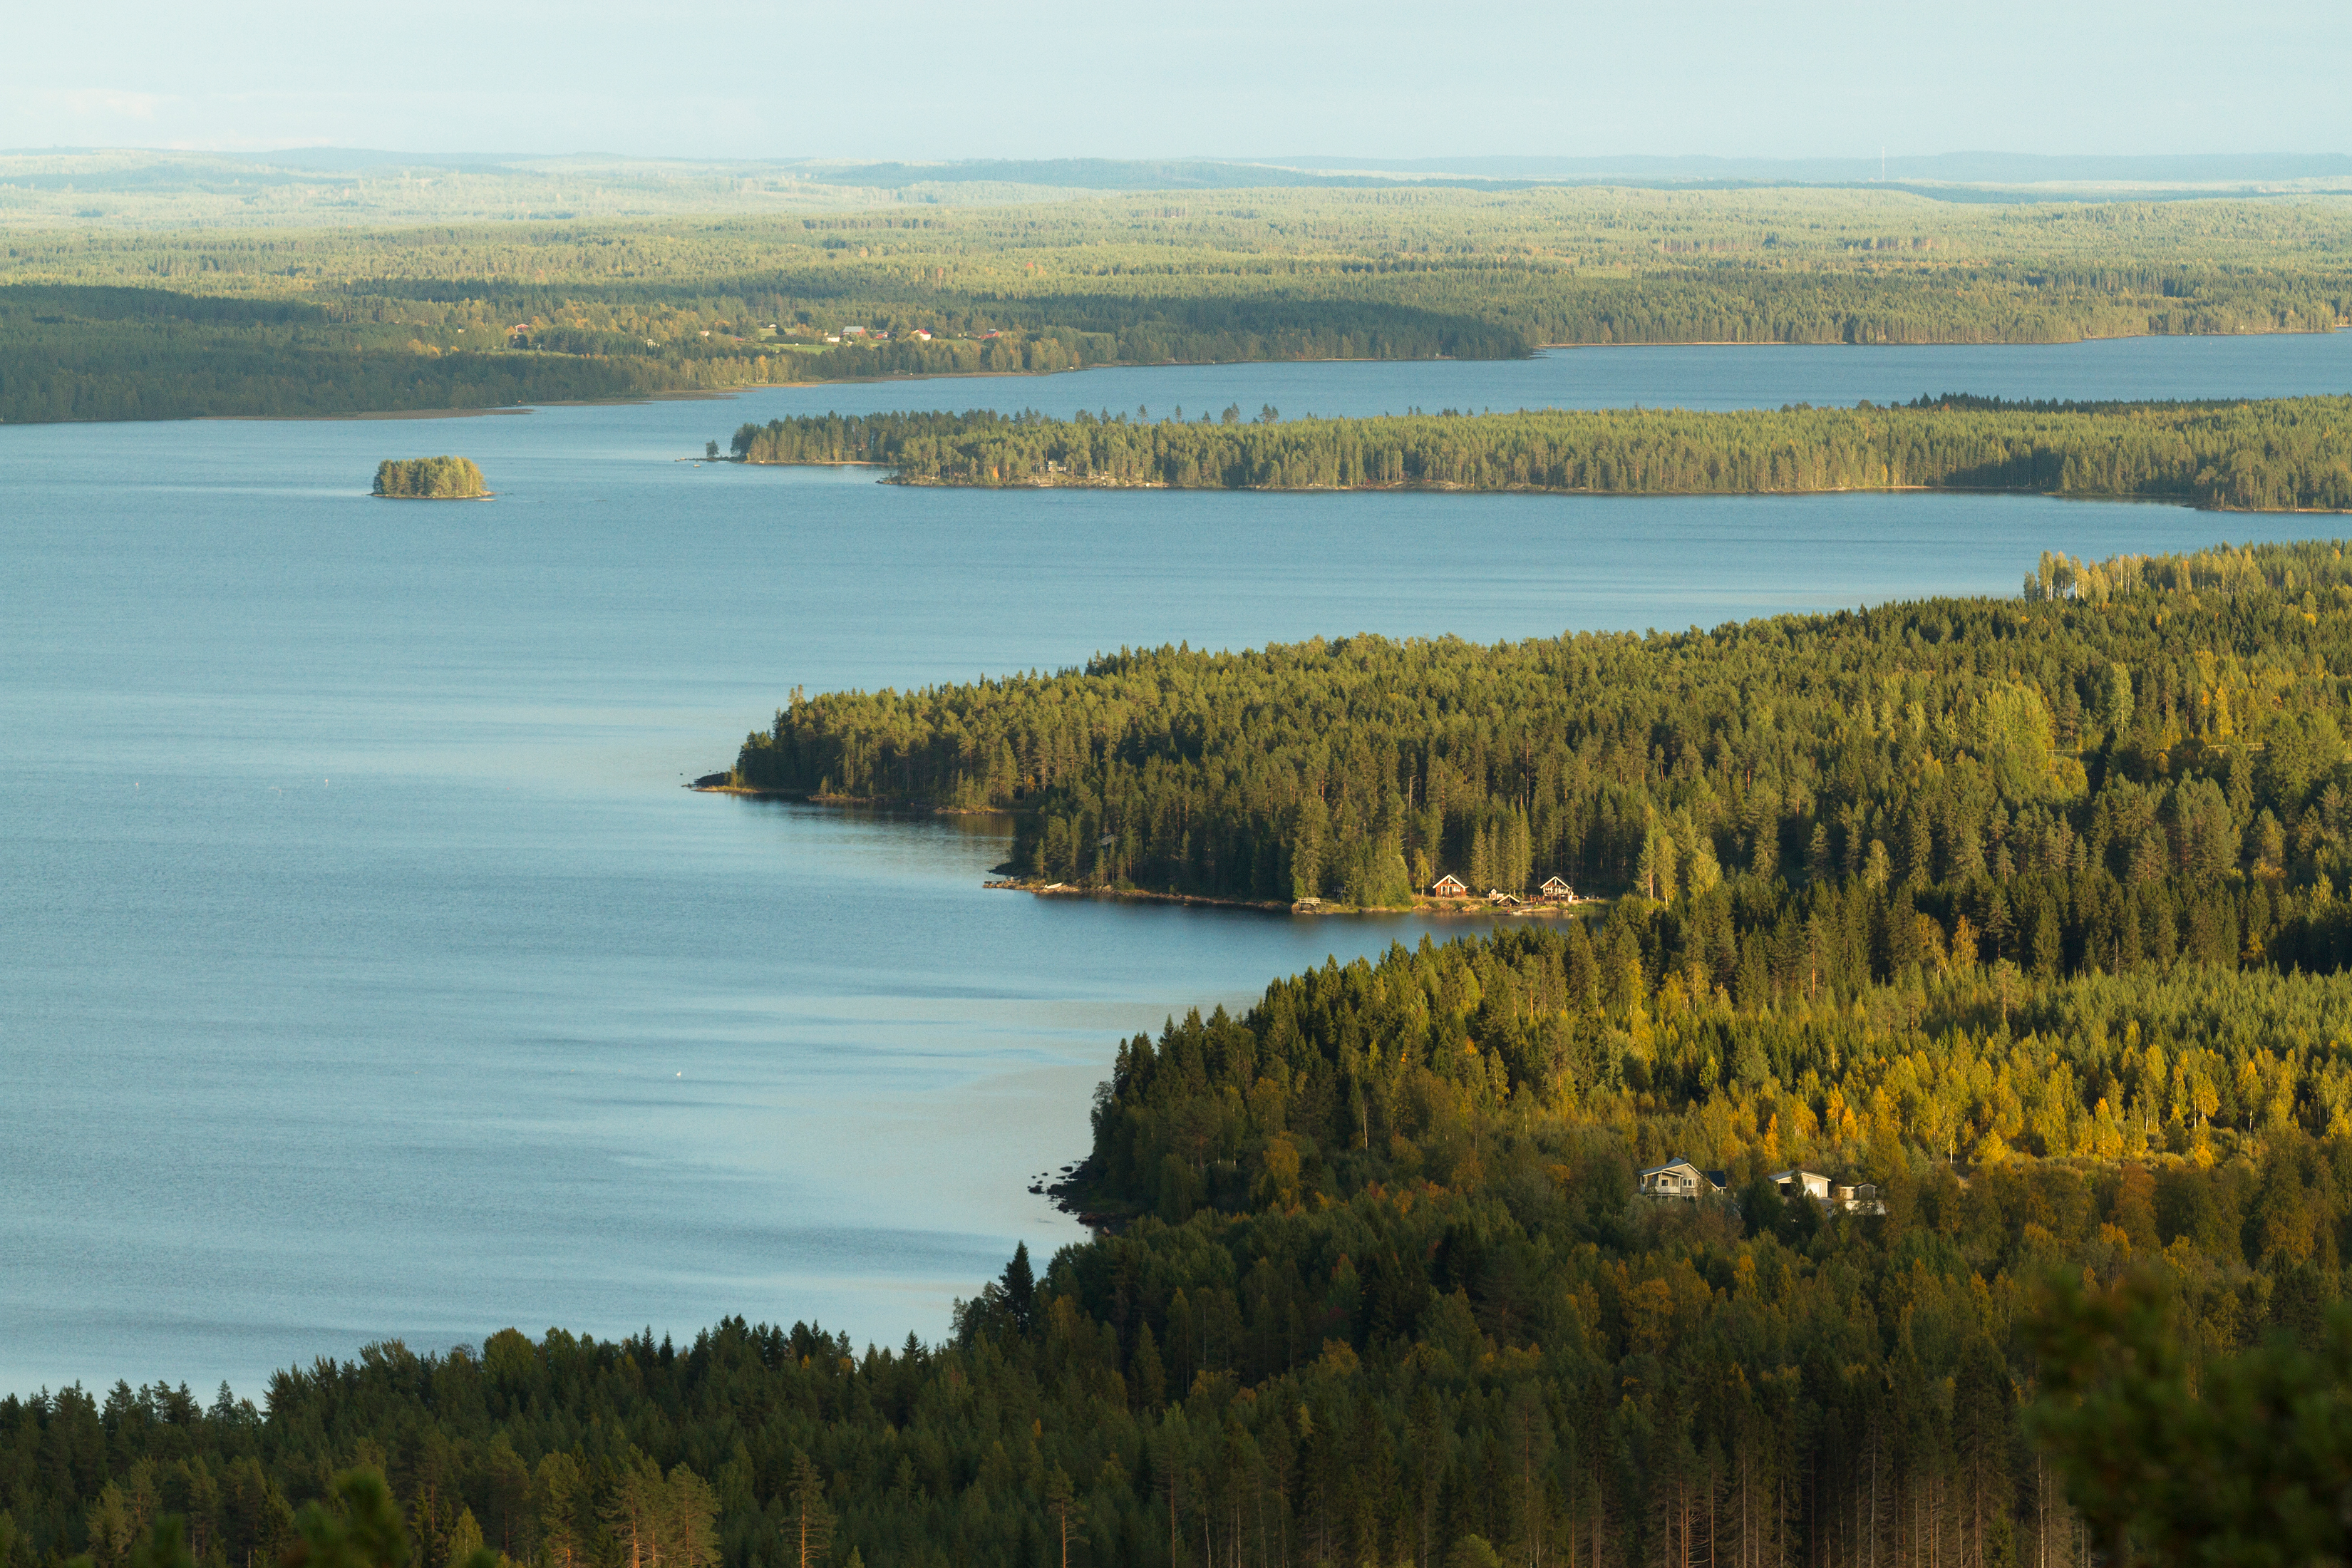 Coastline of Iso Sapsojärvi from Vuokatti, Finland, 2018 September